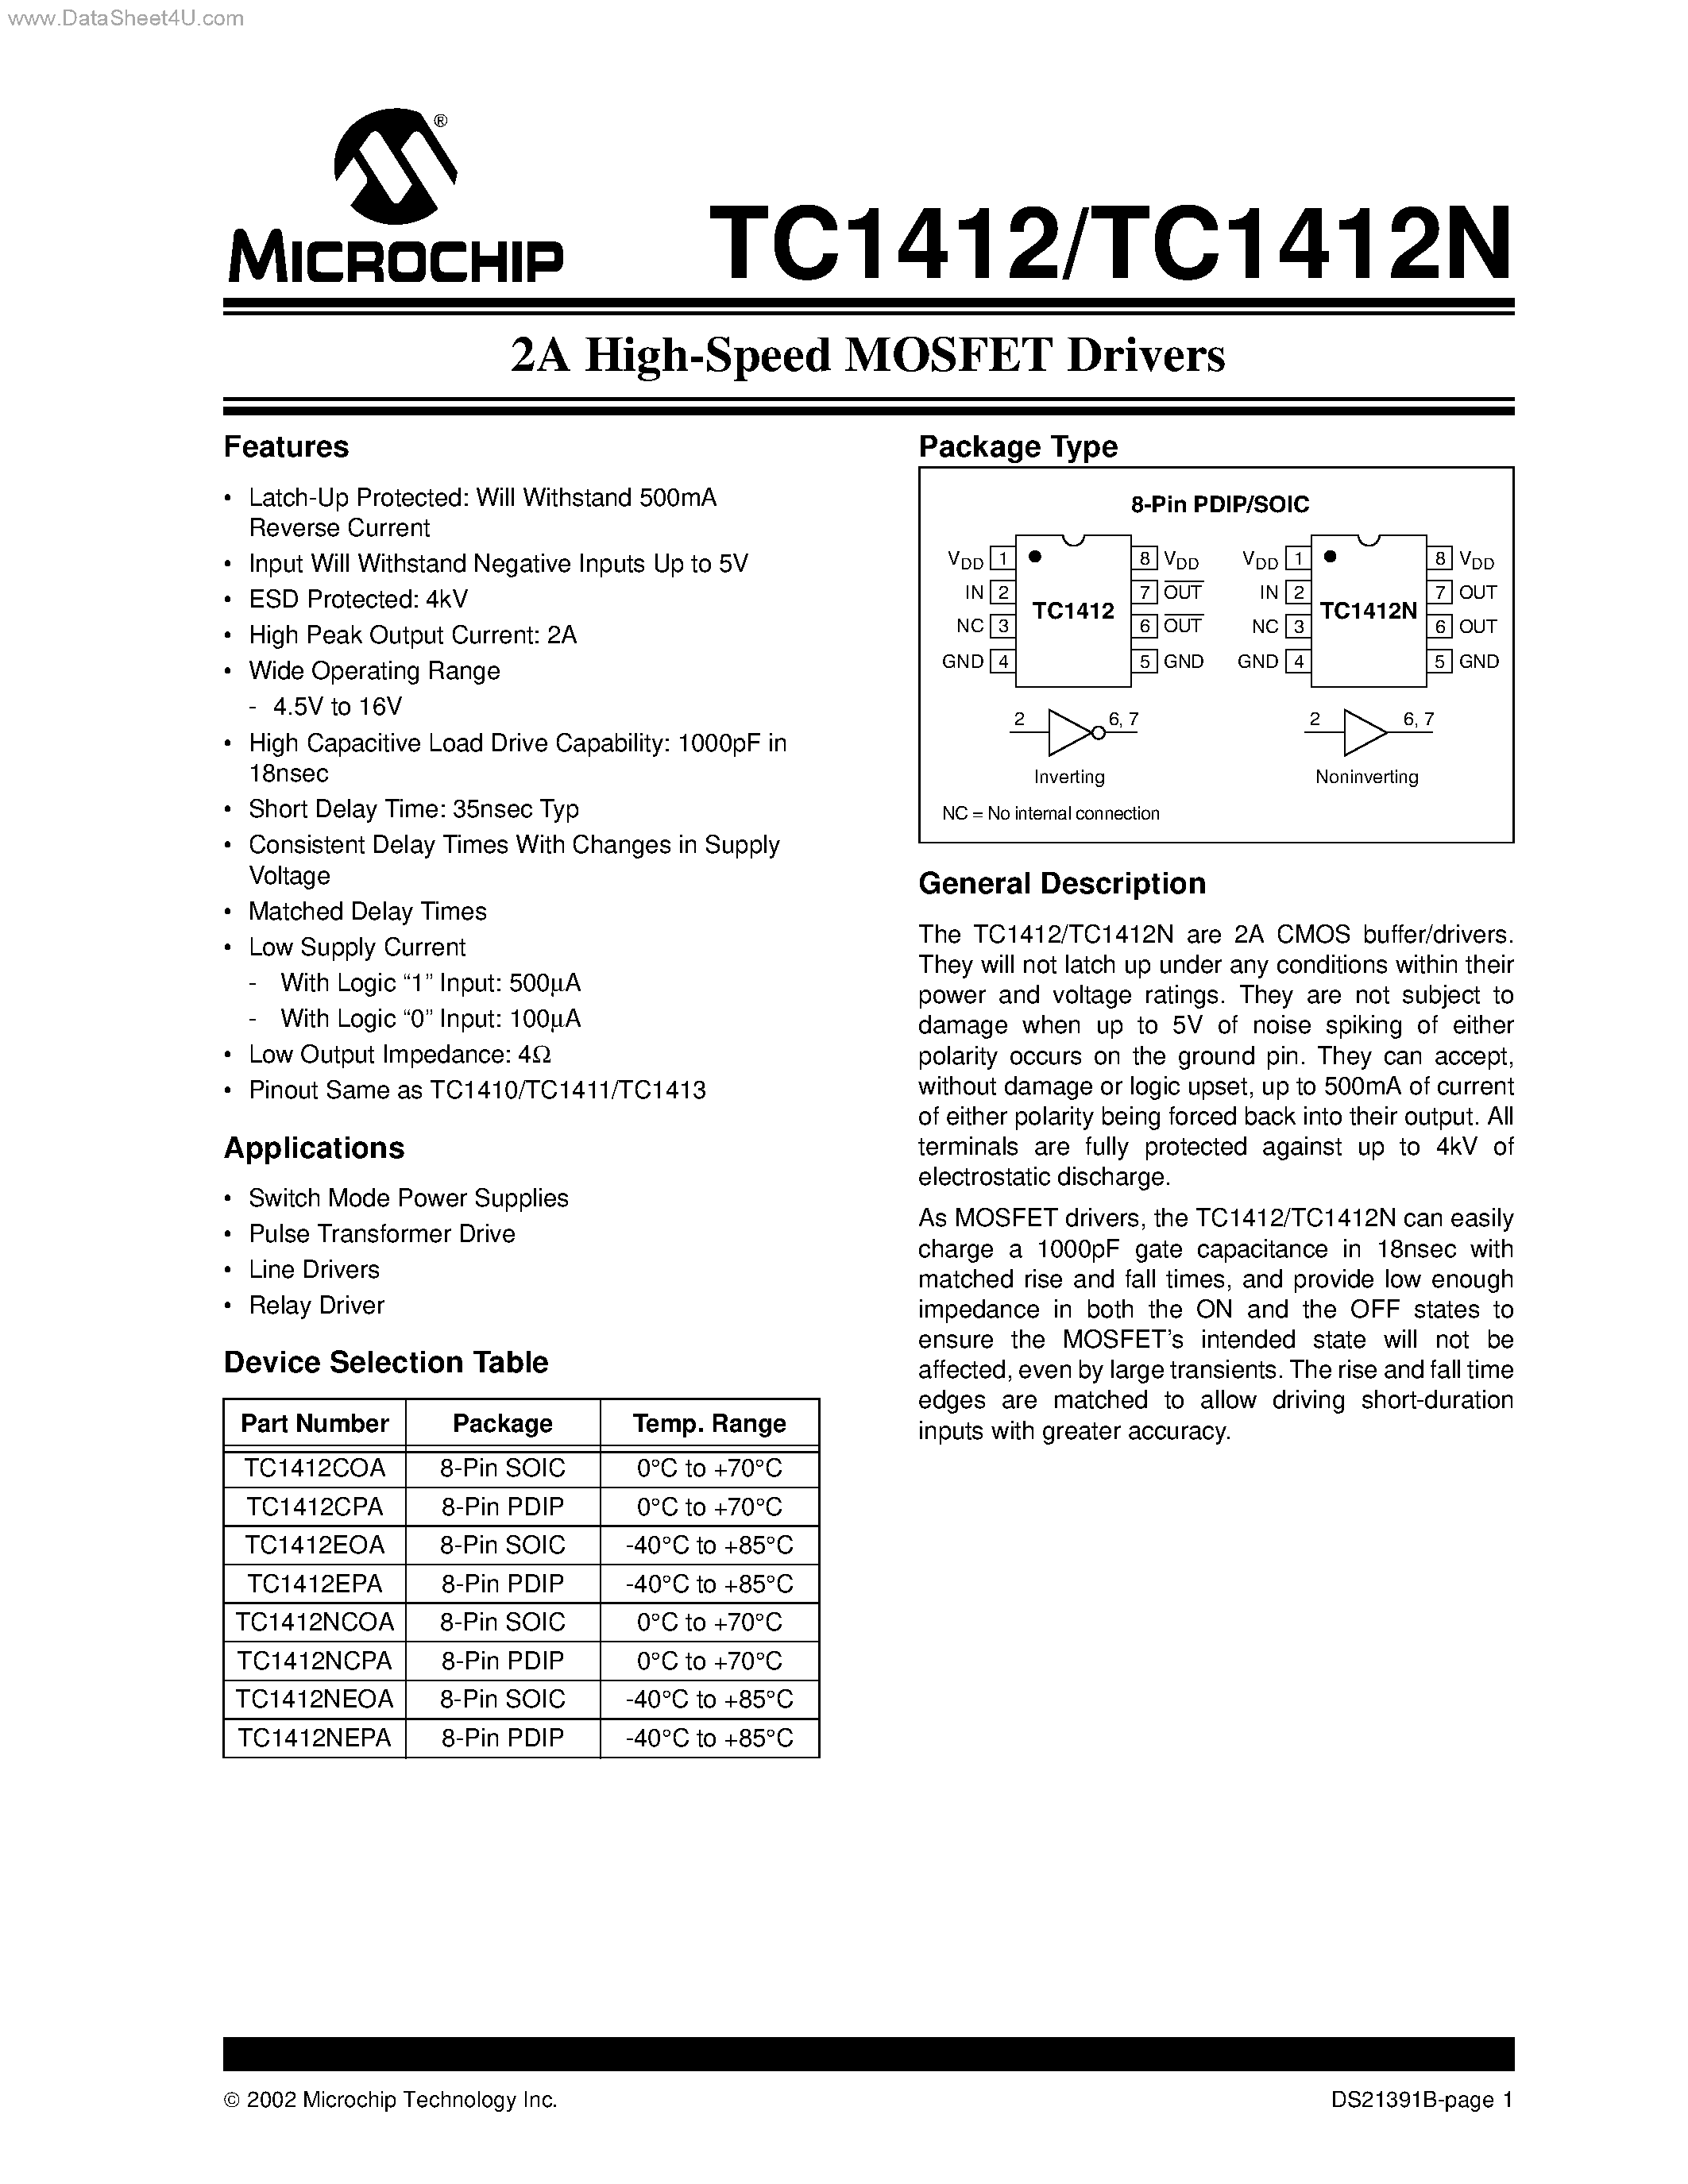 Даташит TC1412 - High-Speed MOSFET Drivers страница 1